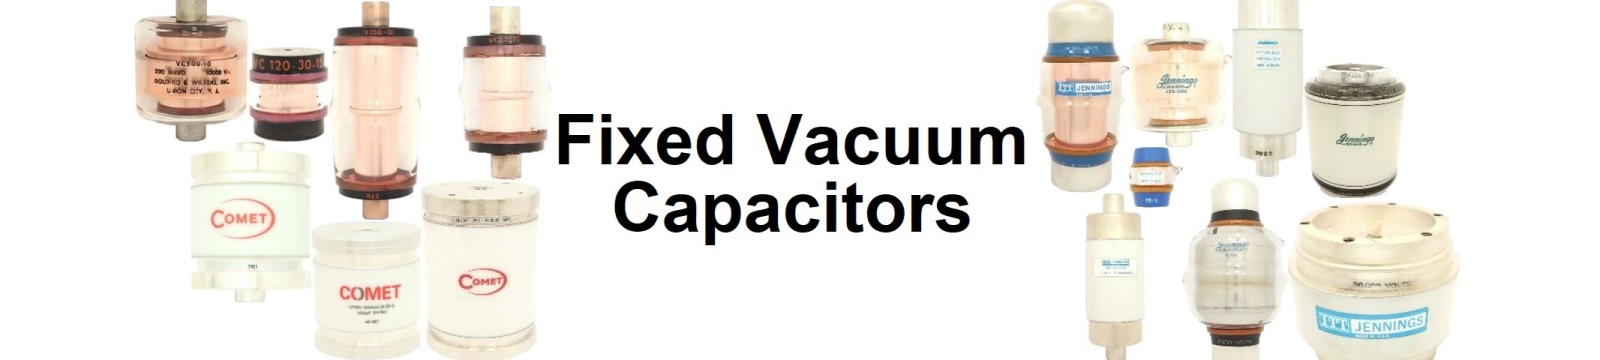 Fixed Vacuum Capacitors Banner 1600x360 - Max-Gain Systems, Inc.